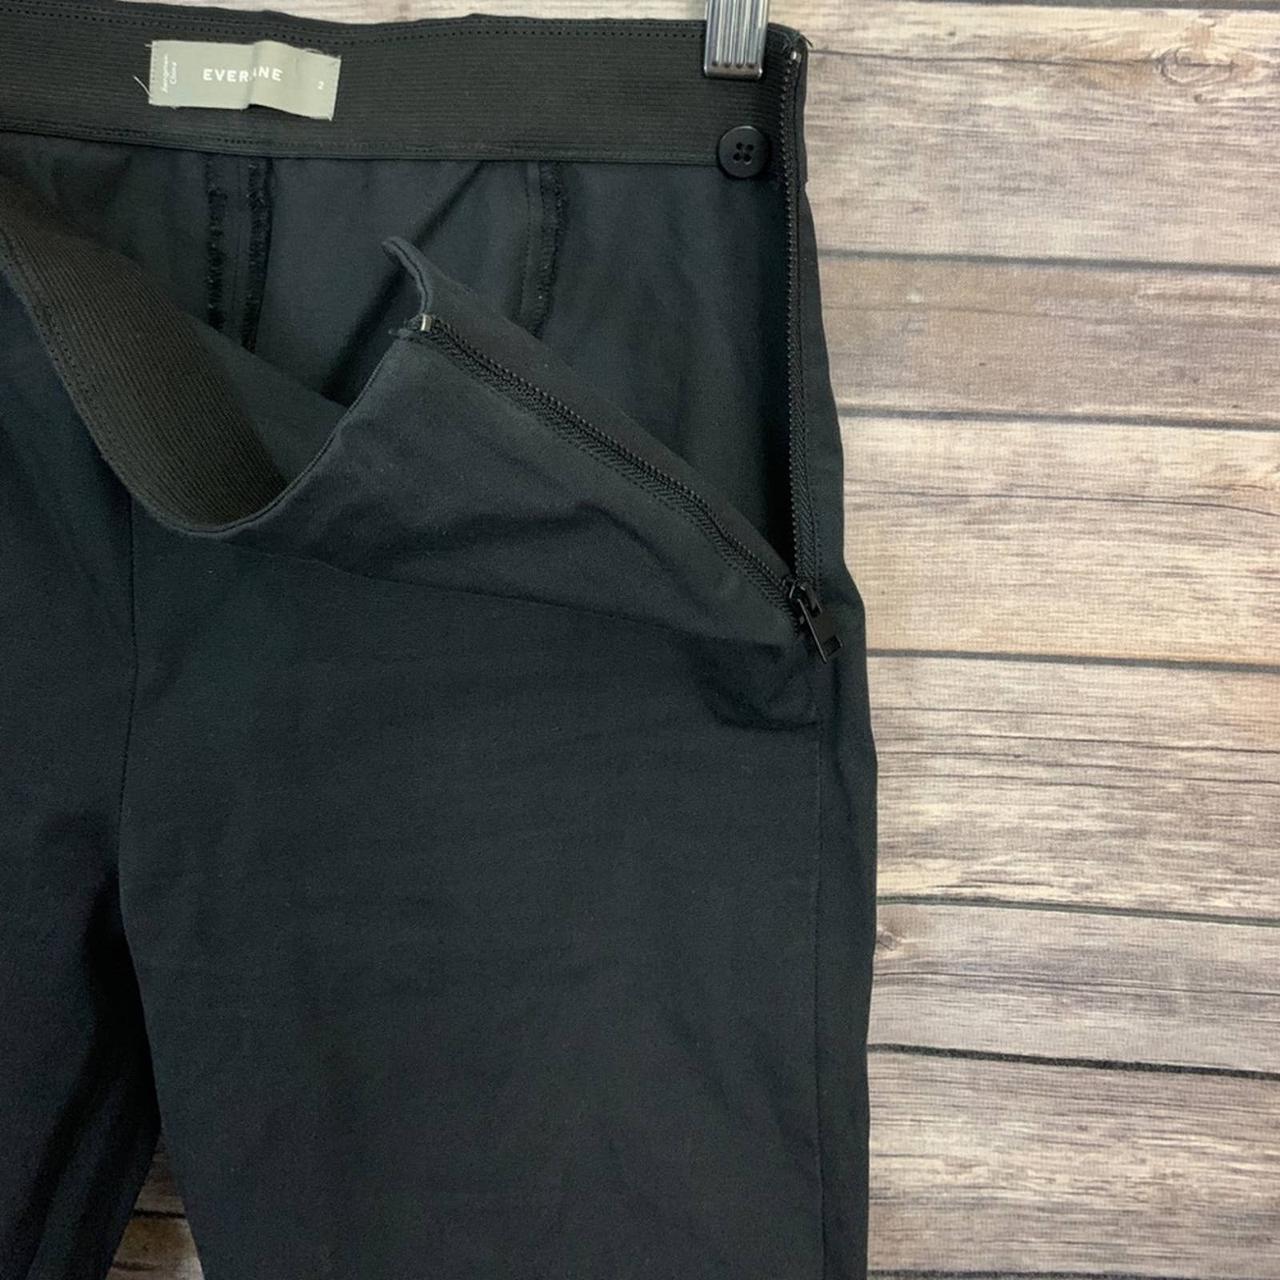 Everlane Side Zip Black Pants Pre-owned Condition:... - Depop